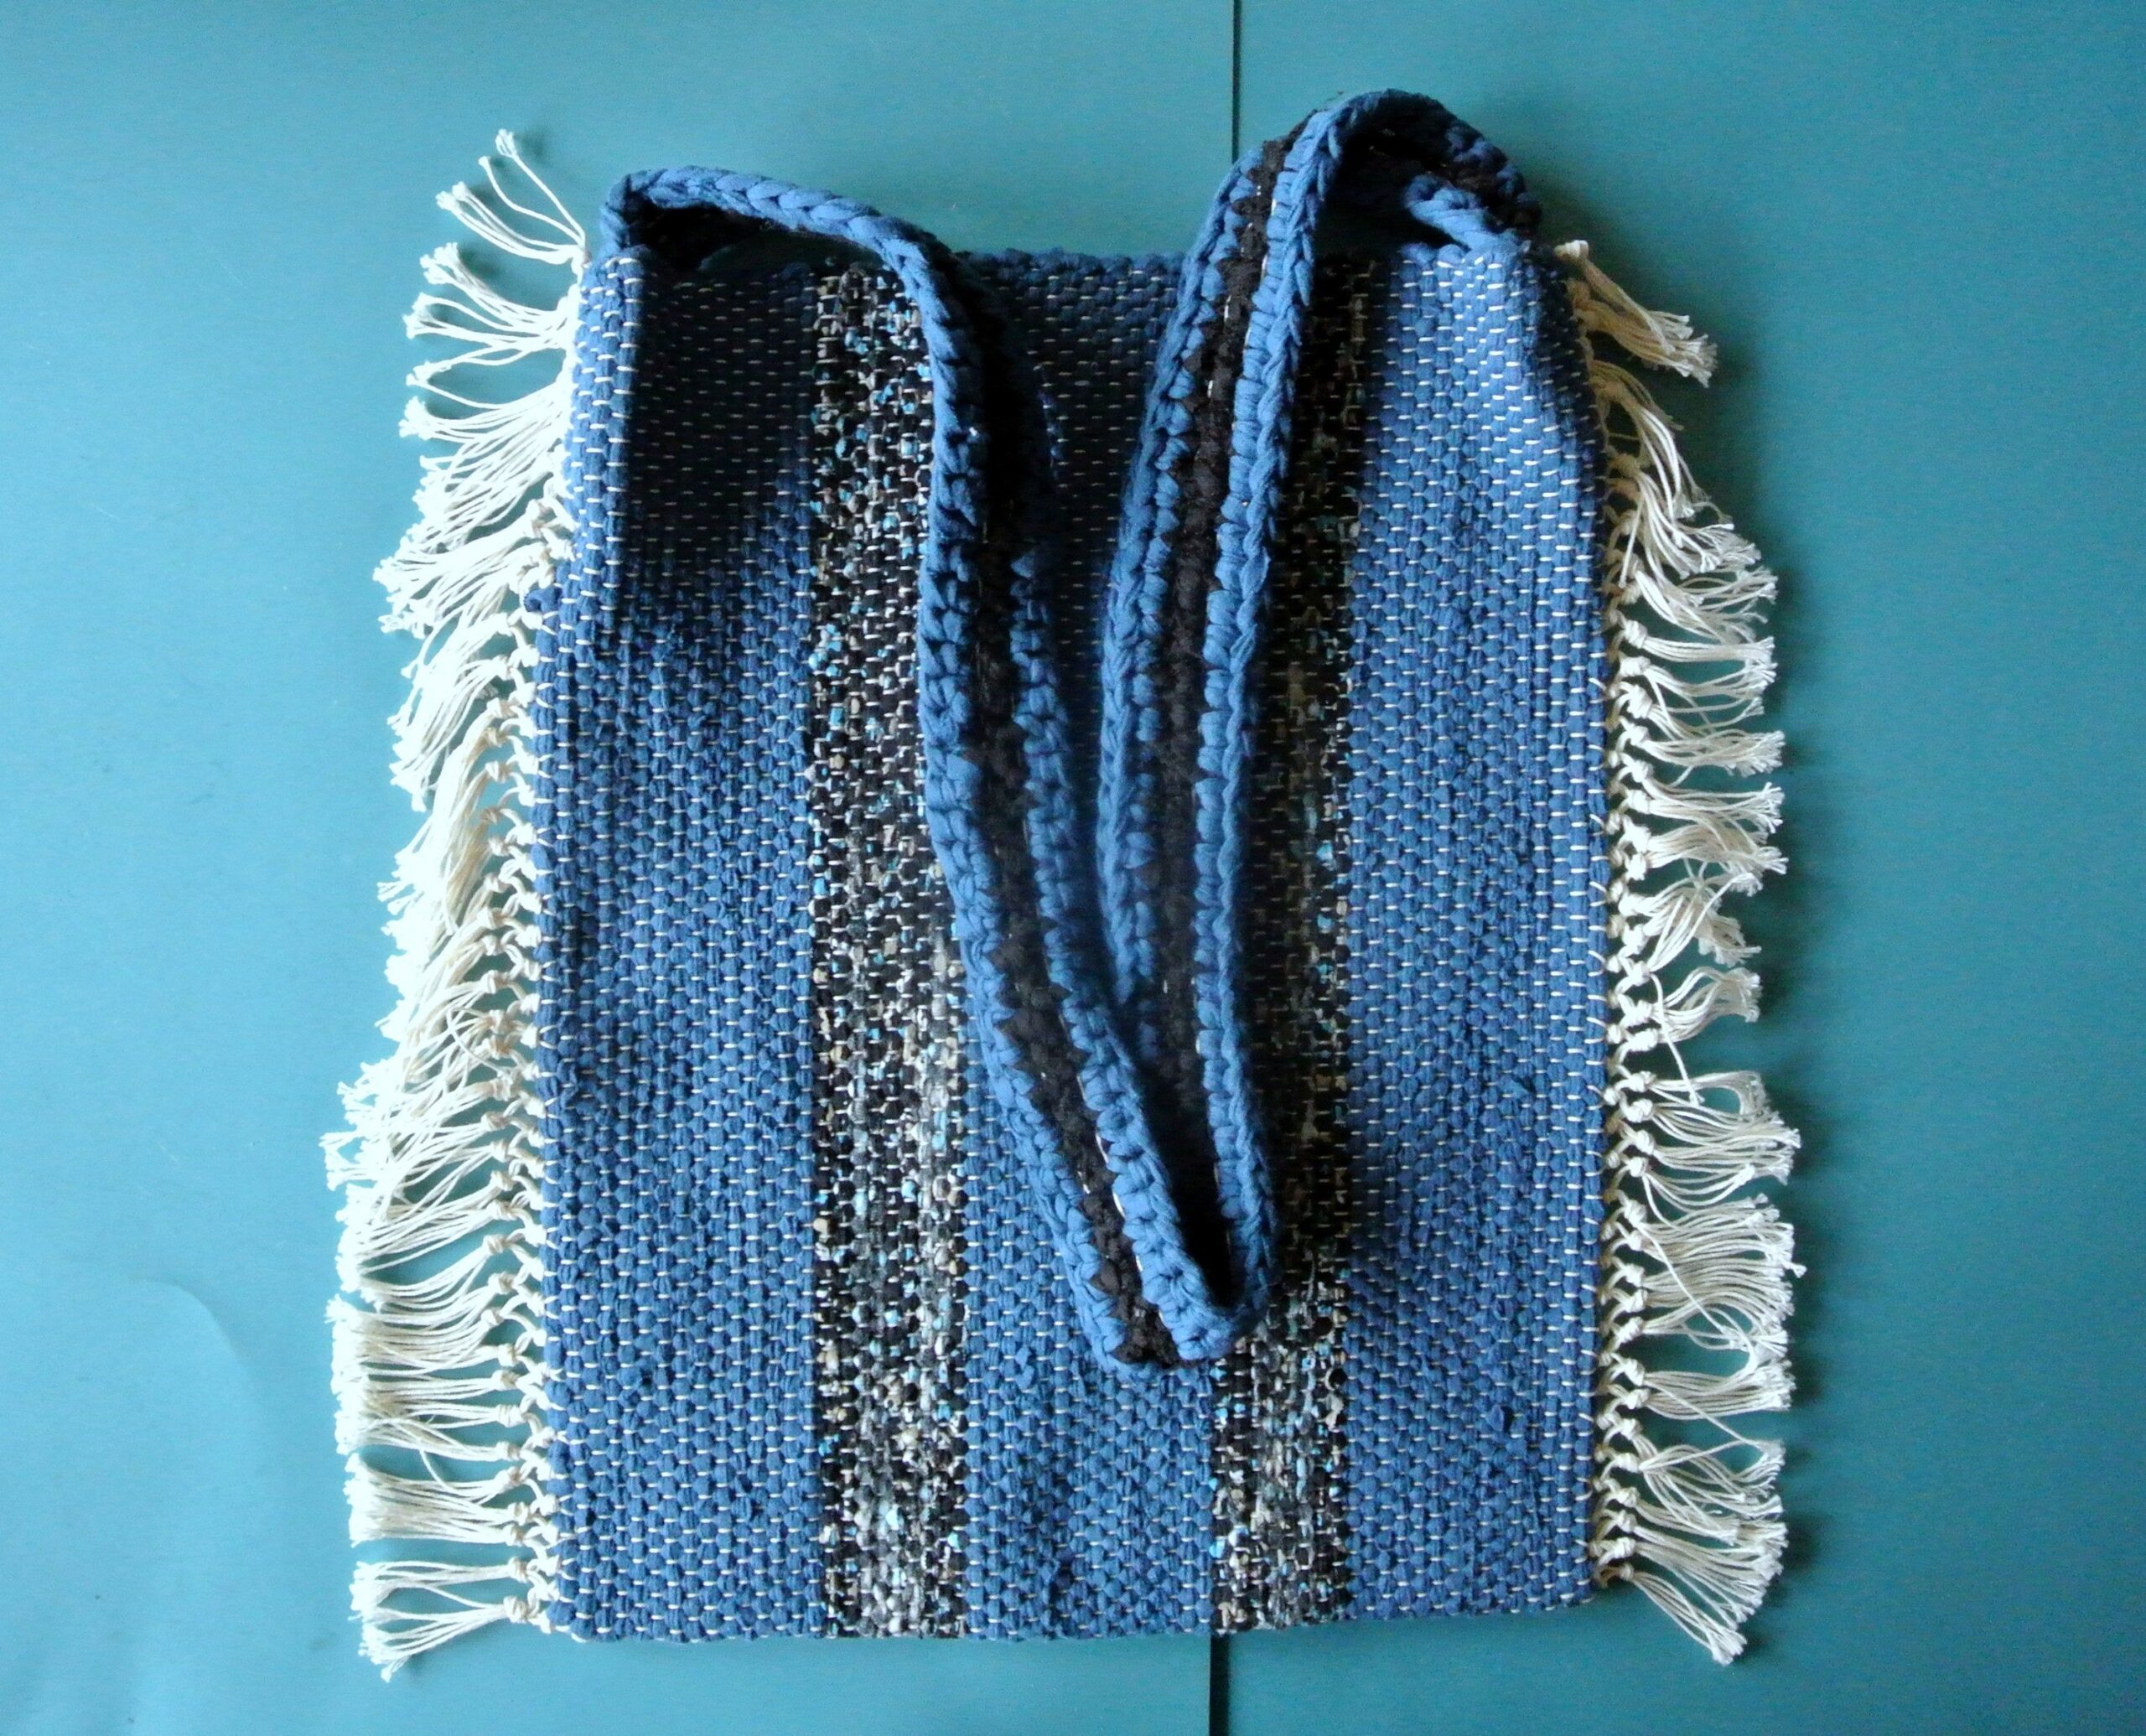 Vibrant and Stylish: The Colorful Striped Rag Rug Bag